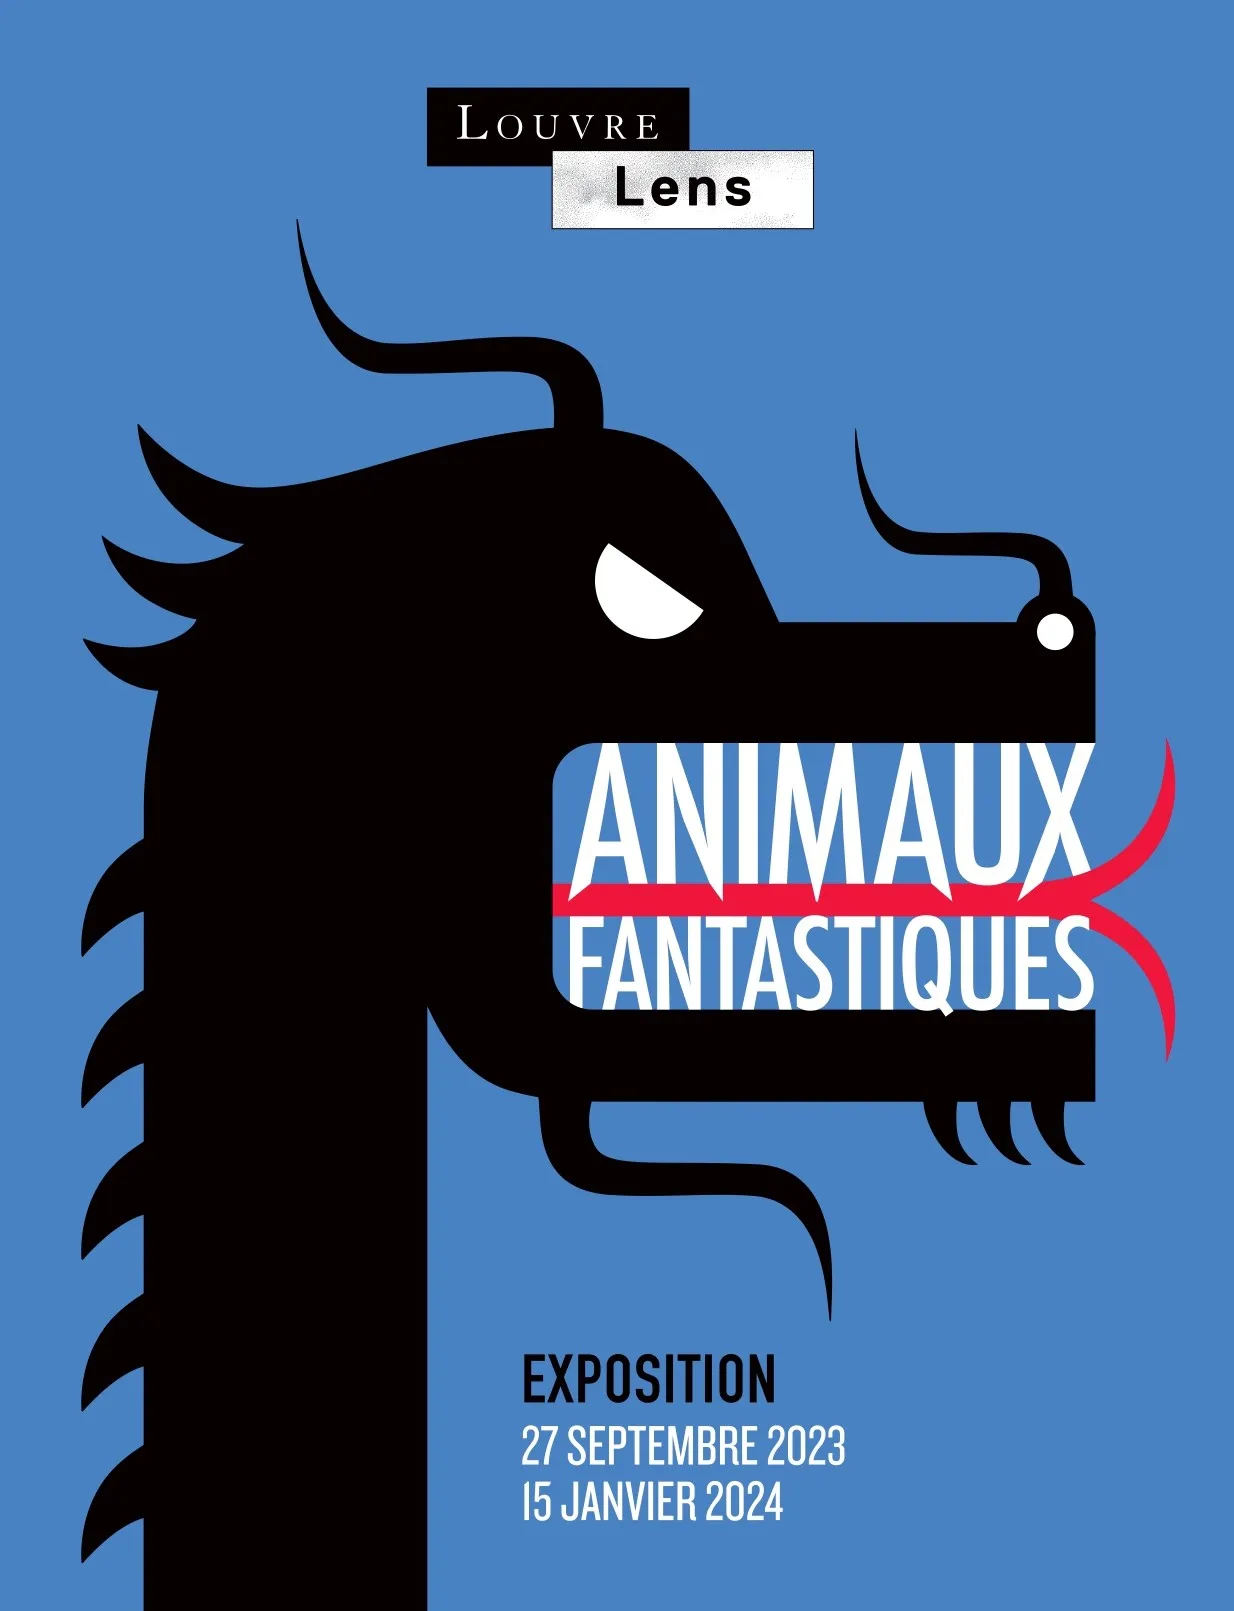 Fantastic animals exhibition poster